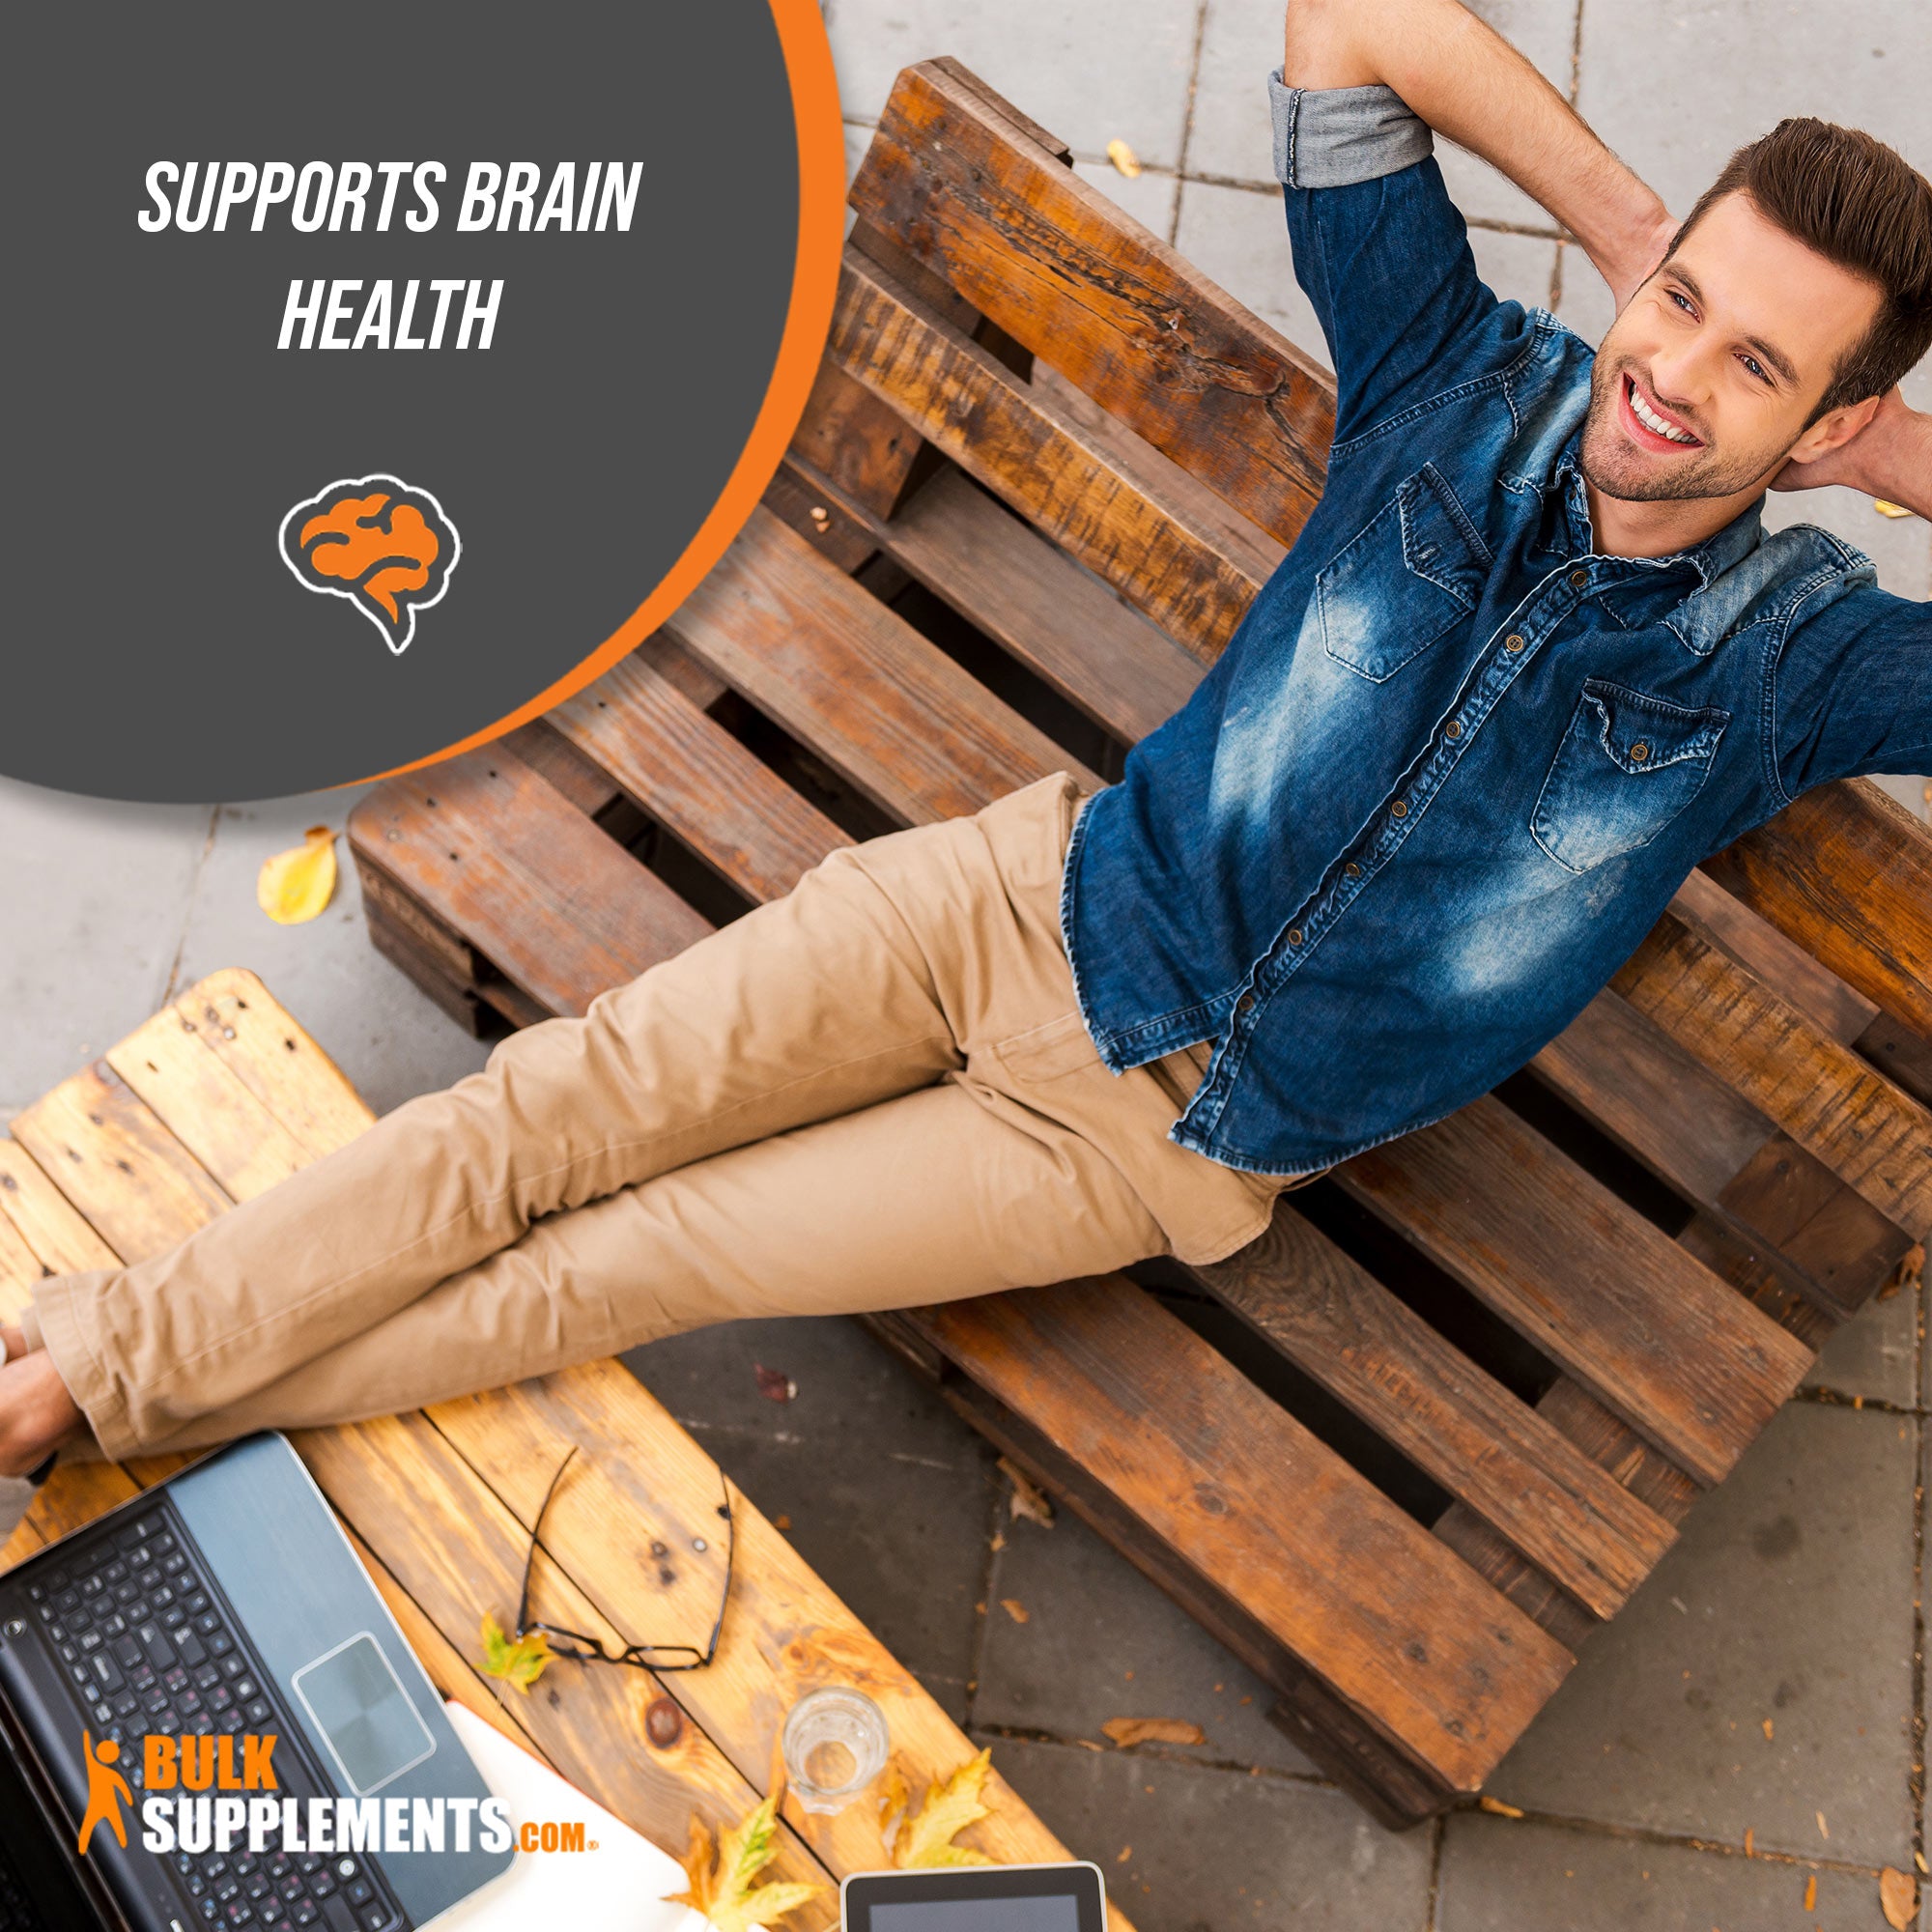 Omega 369 Softgels Brain Health Benefit